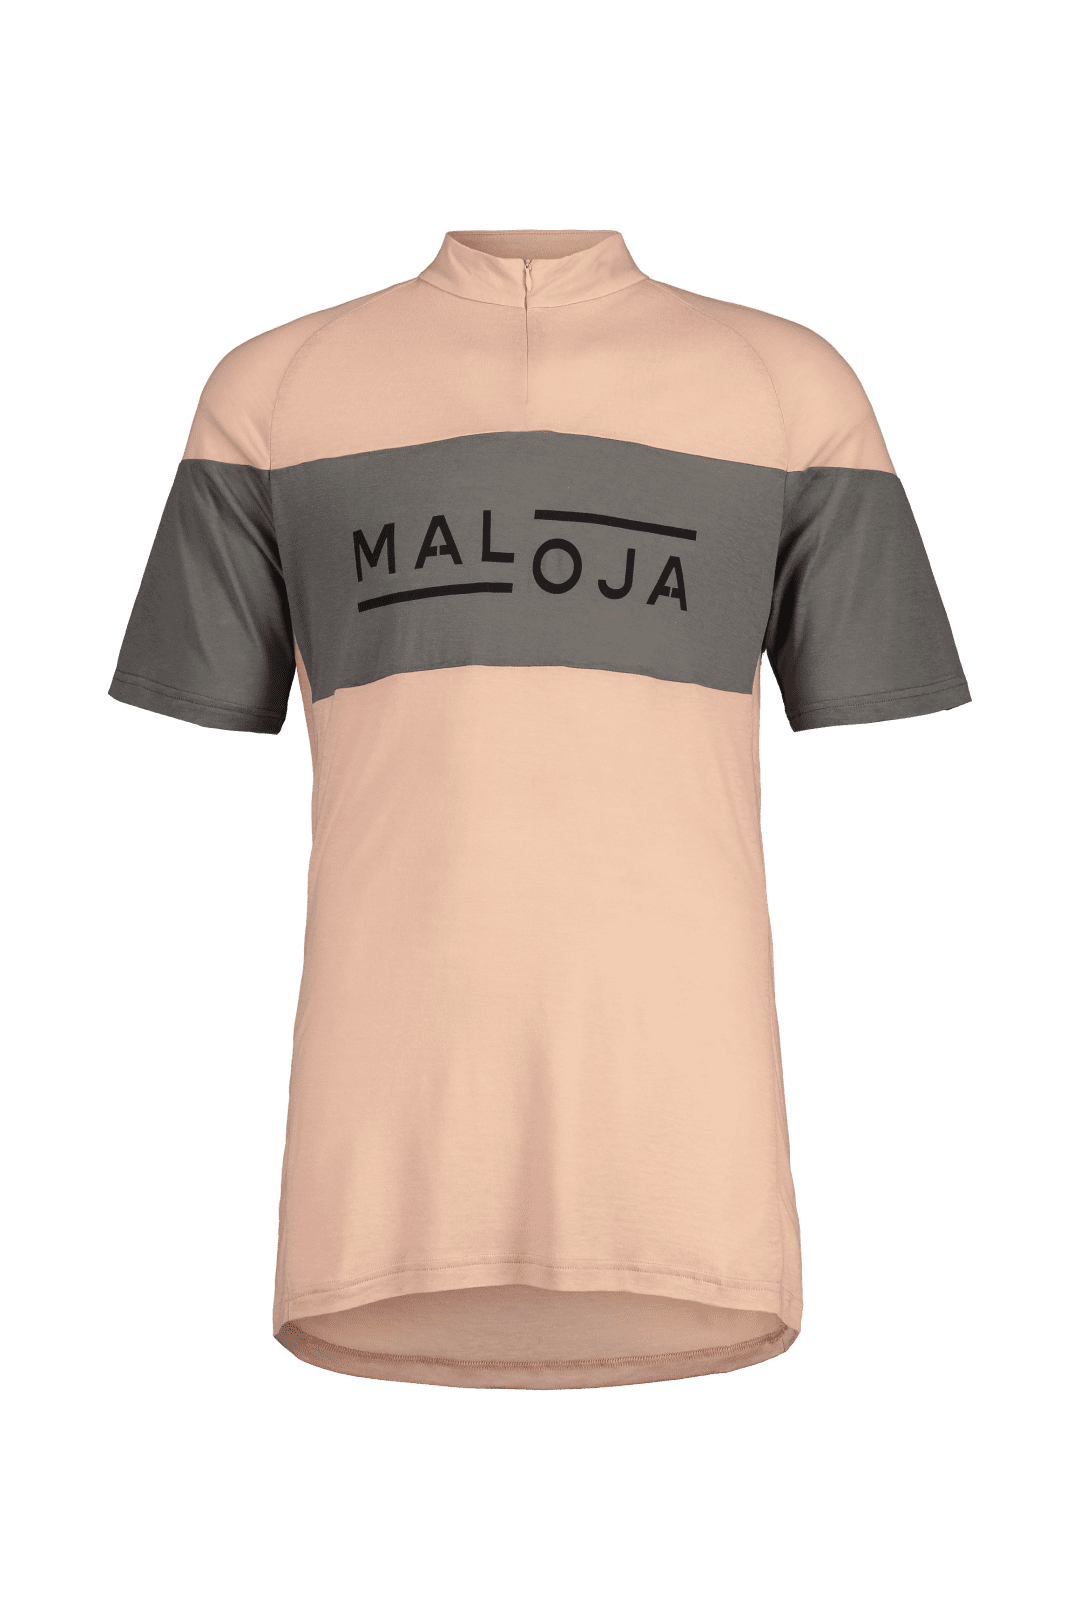 1/2 Maillot Bike shirt Messieurs radtrikot div COL GR S 19234 Occasion Maloja amasm 